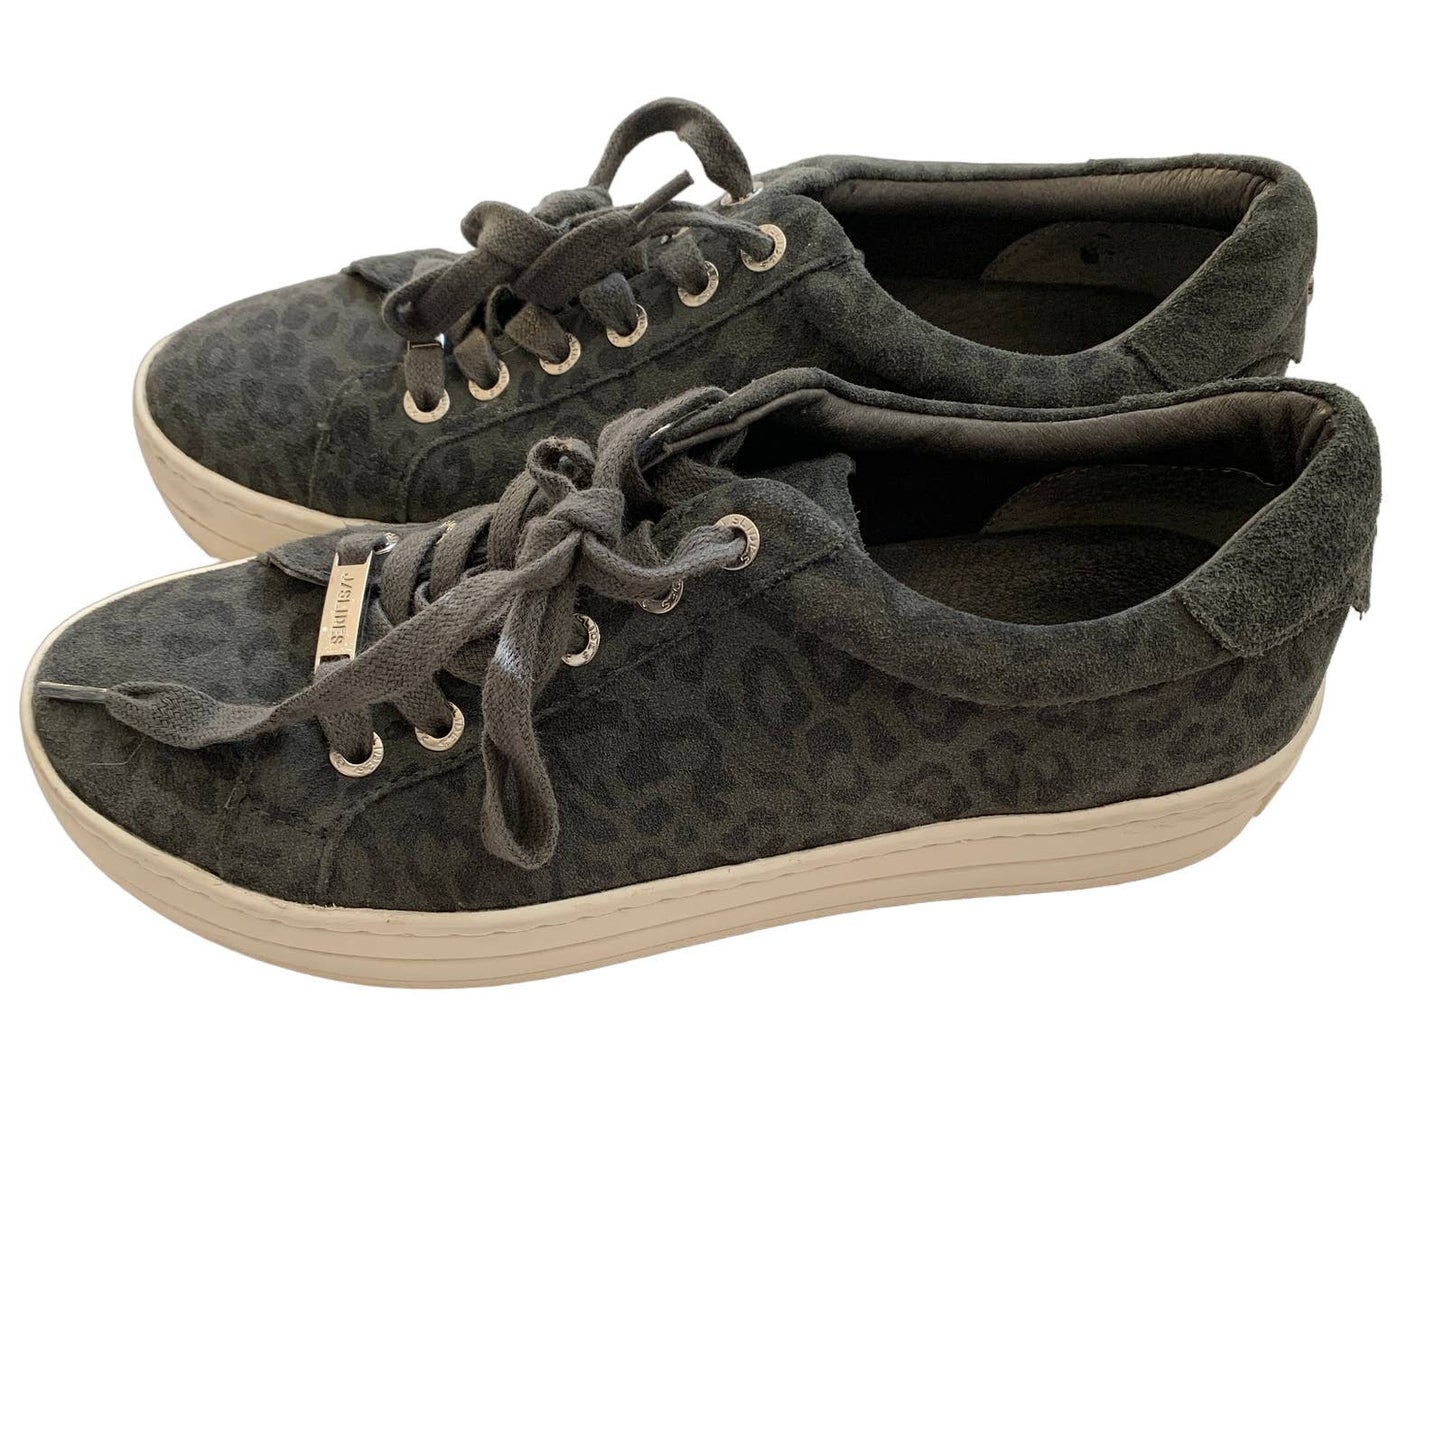 J / Slides Grey Suede Leopard Hippie Platform Sneakers 7.5